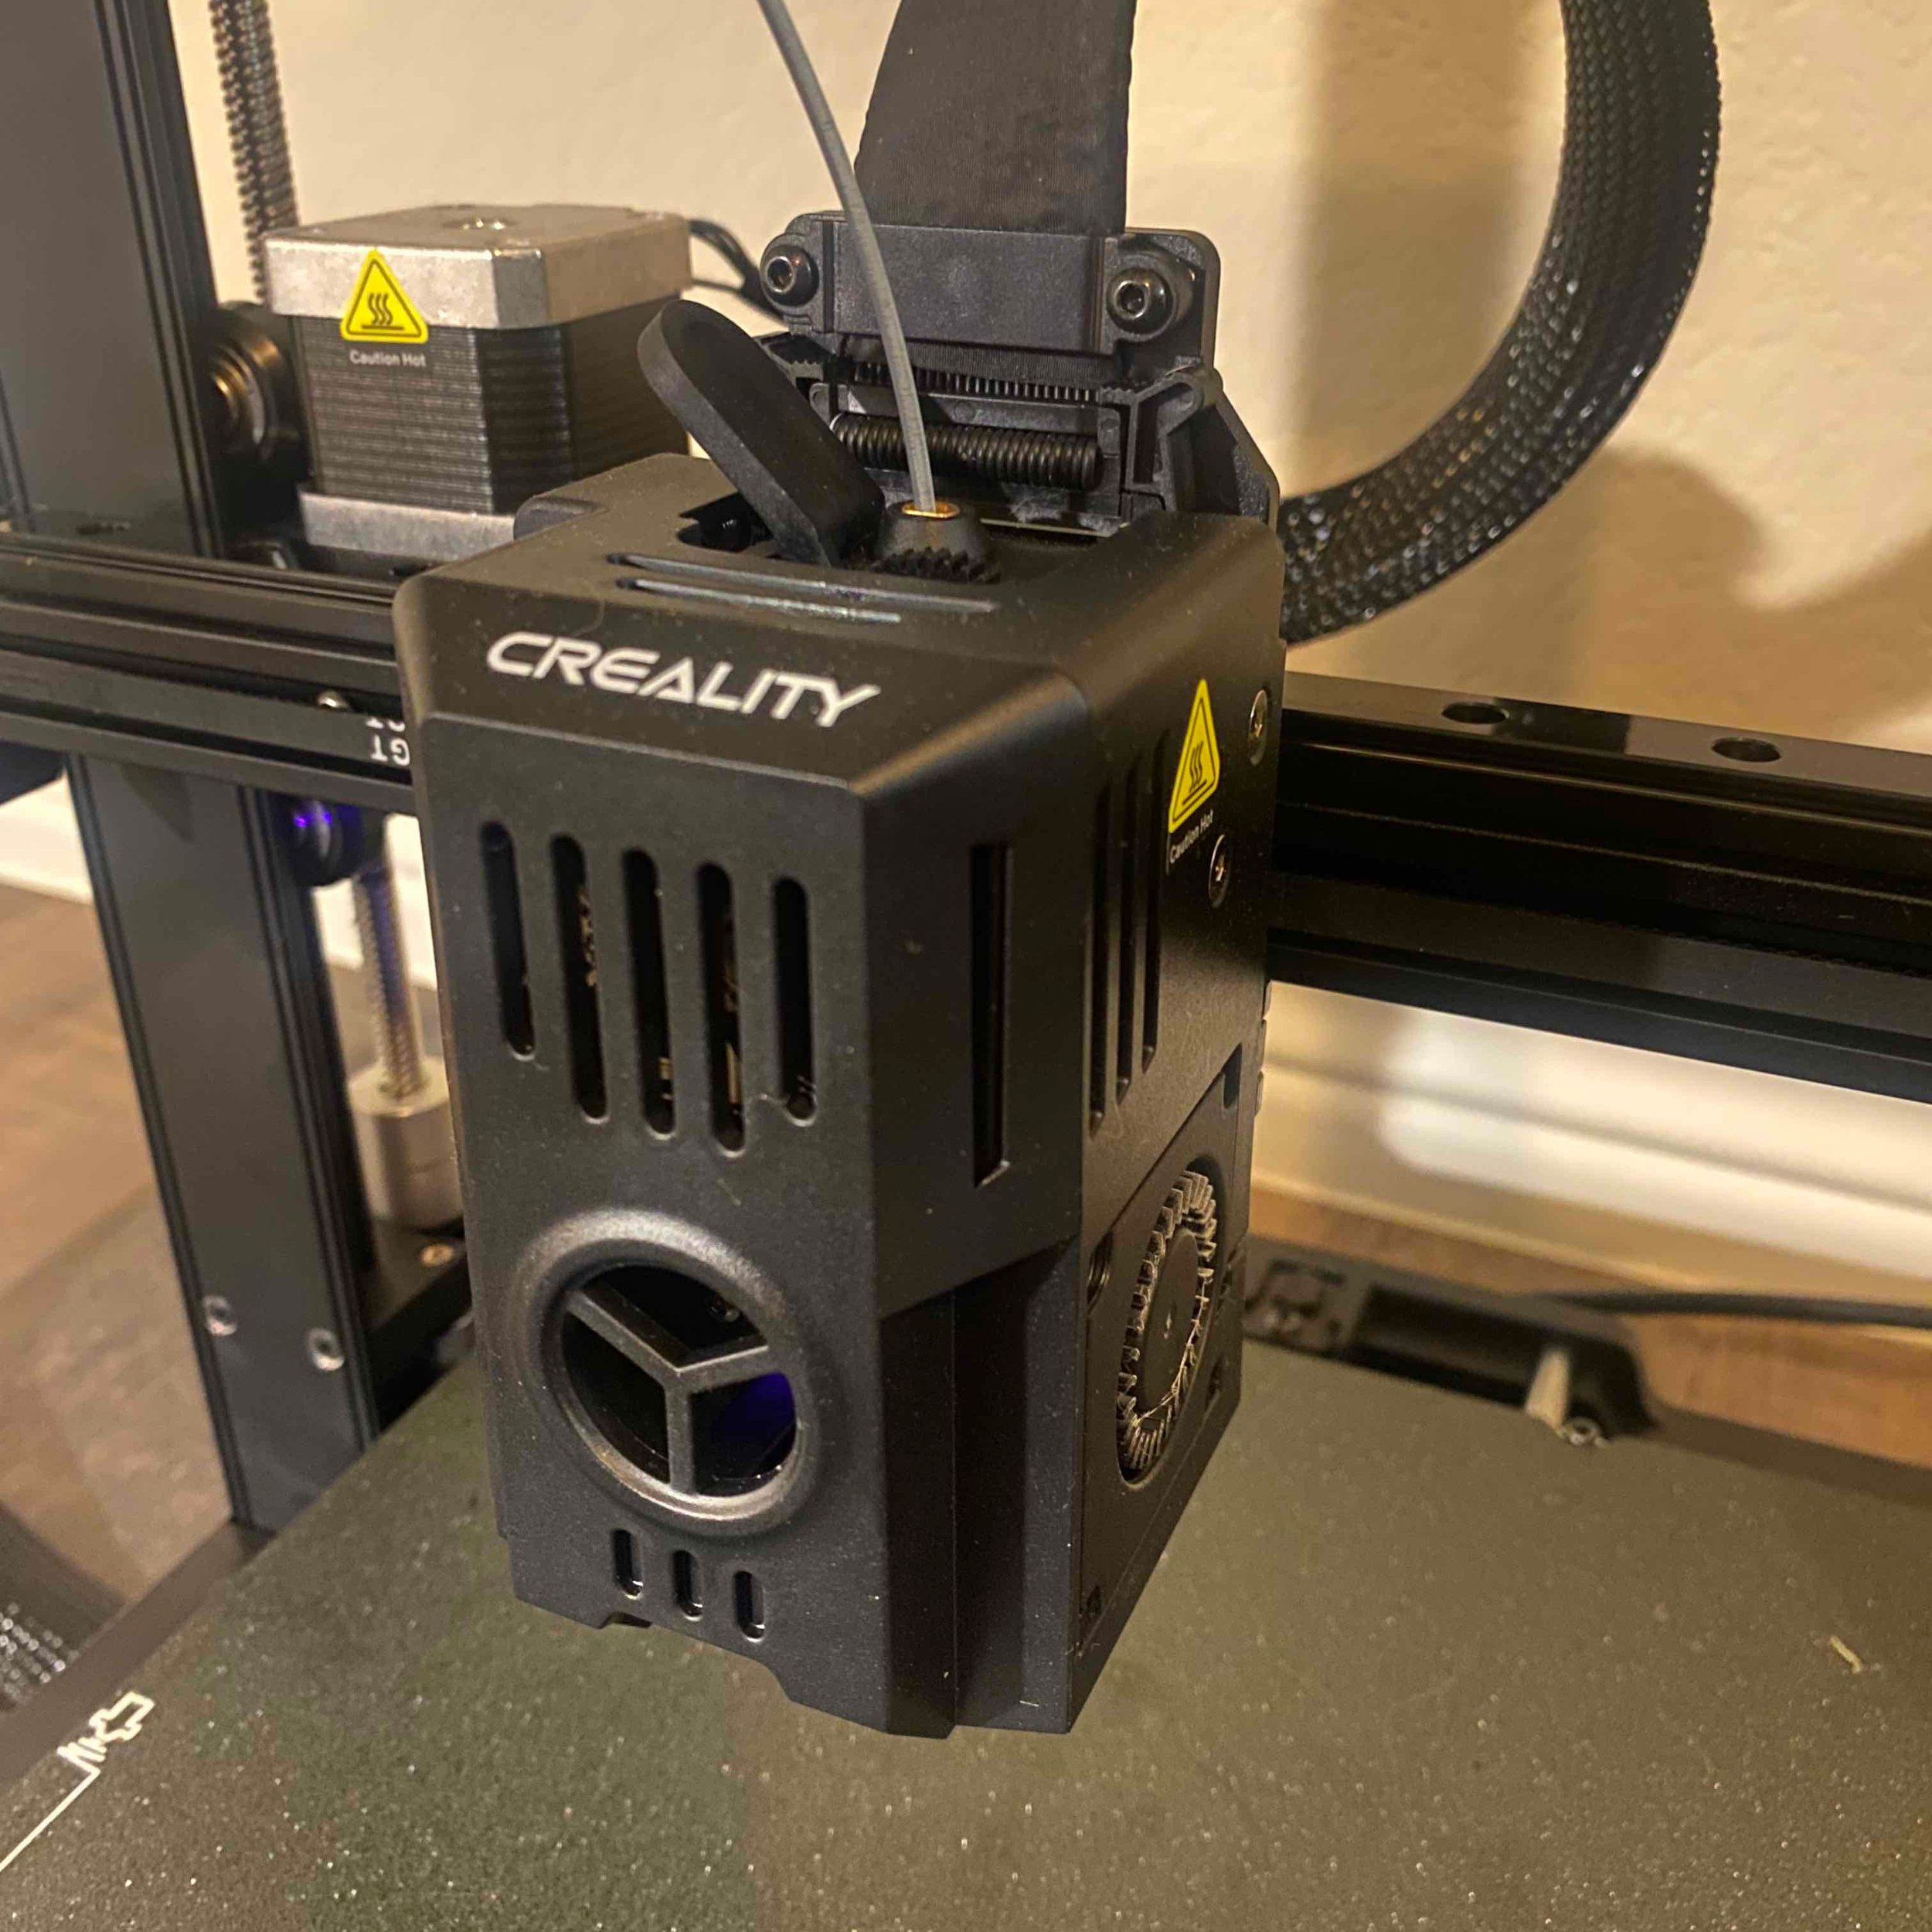 Creality Ender 3 V3 SE 3D Printer FDM 3D Printers with CR Touch